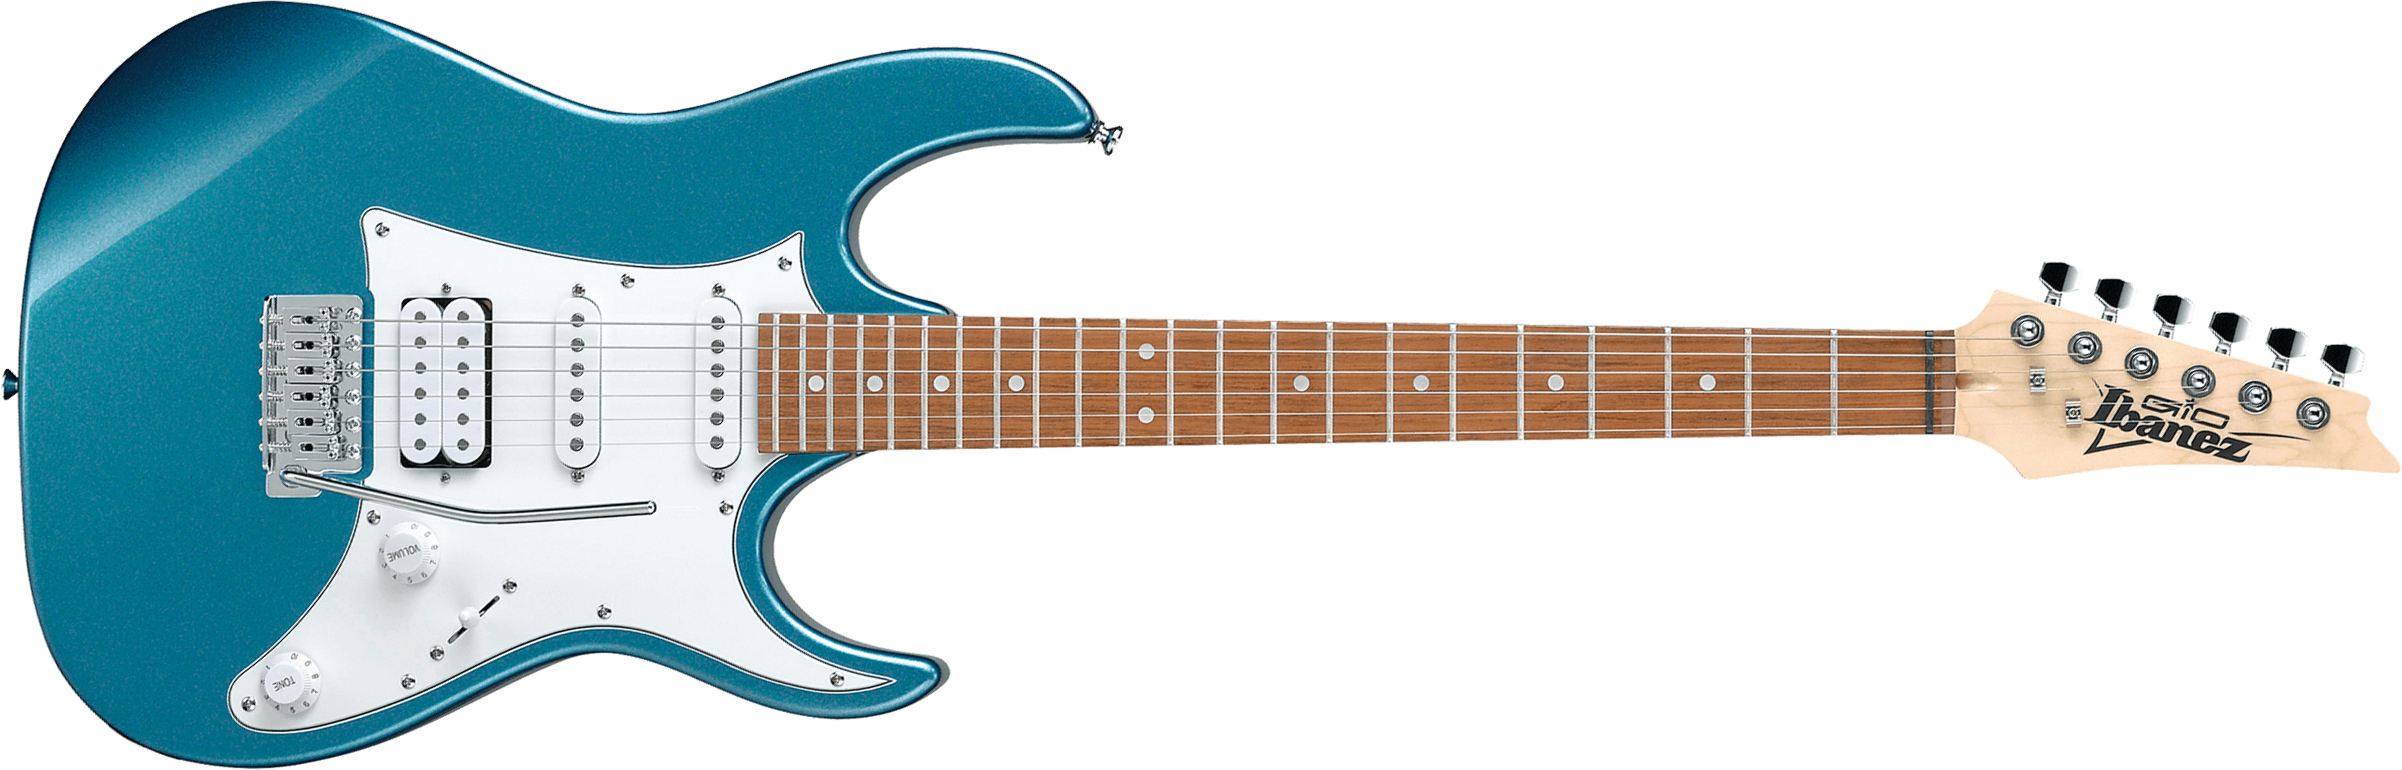 Ibanez Grx40 Mlb Gio Hss Trem Jat - Metallic Light Blue - Str shape electric guitar - Main picture